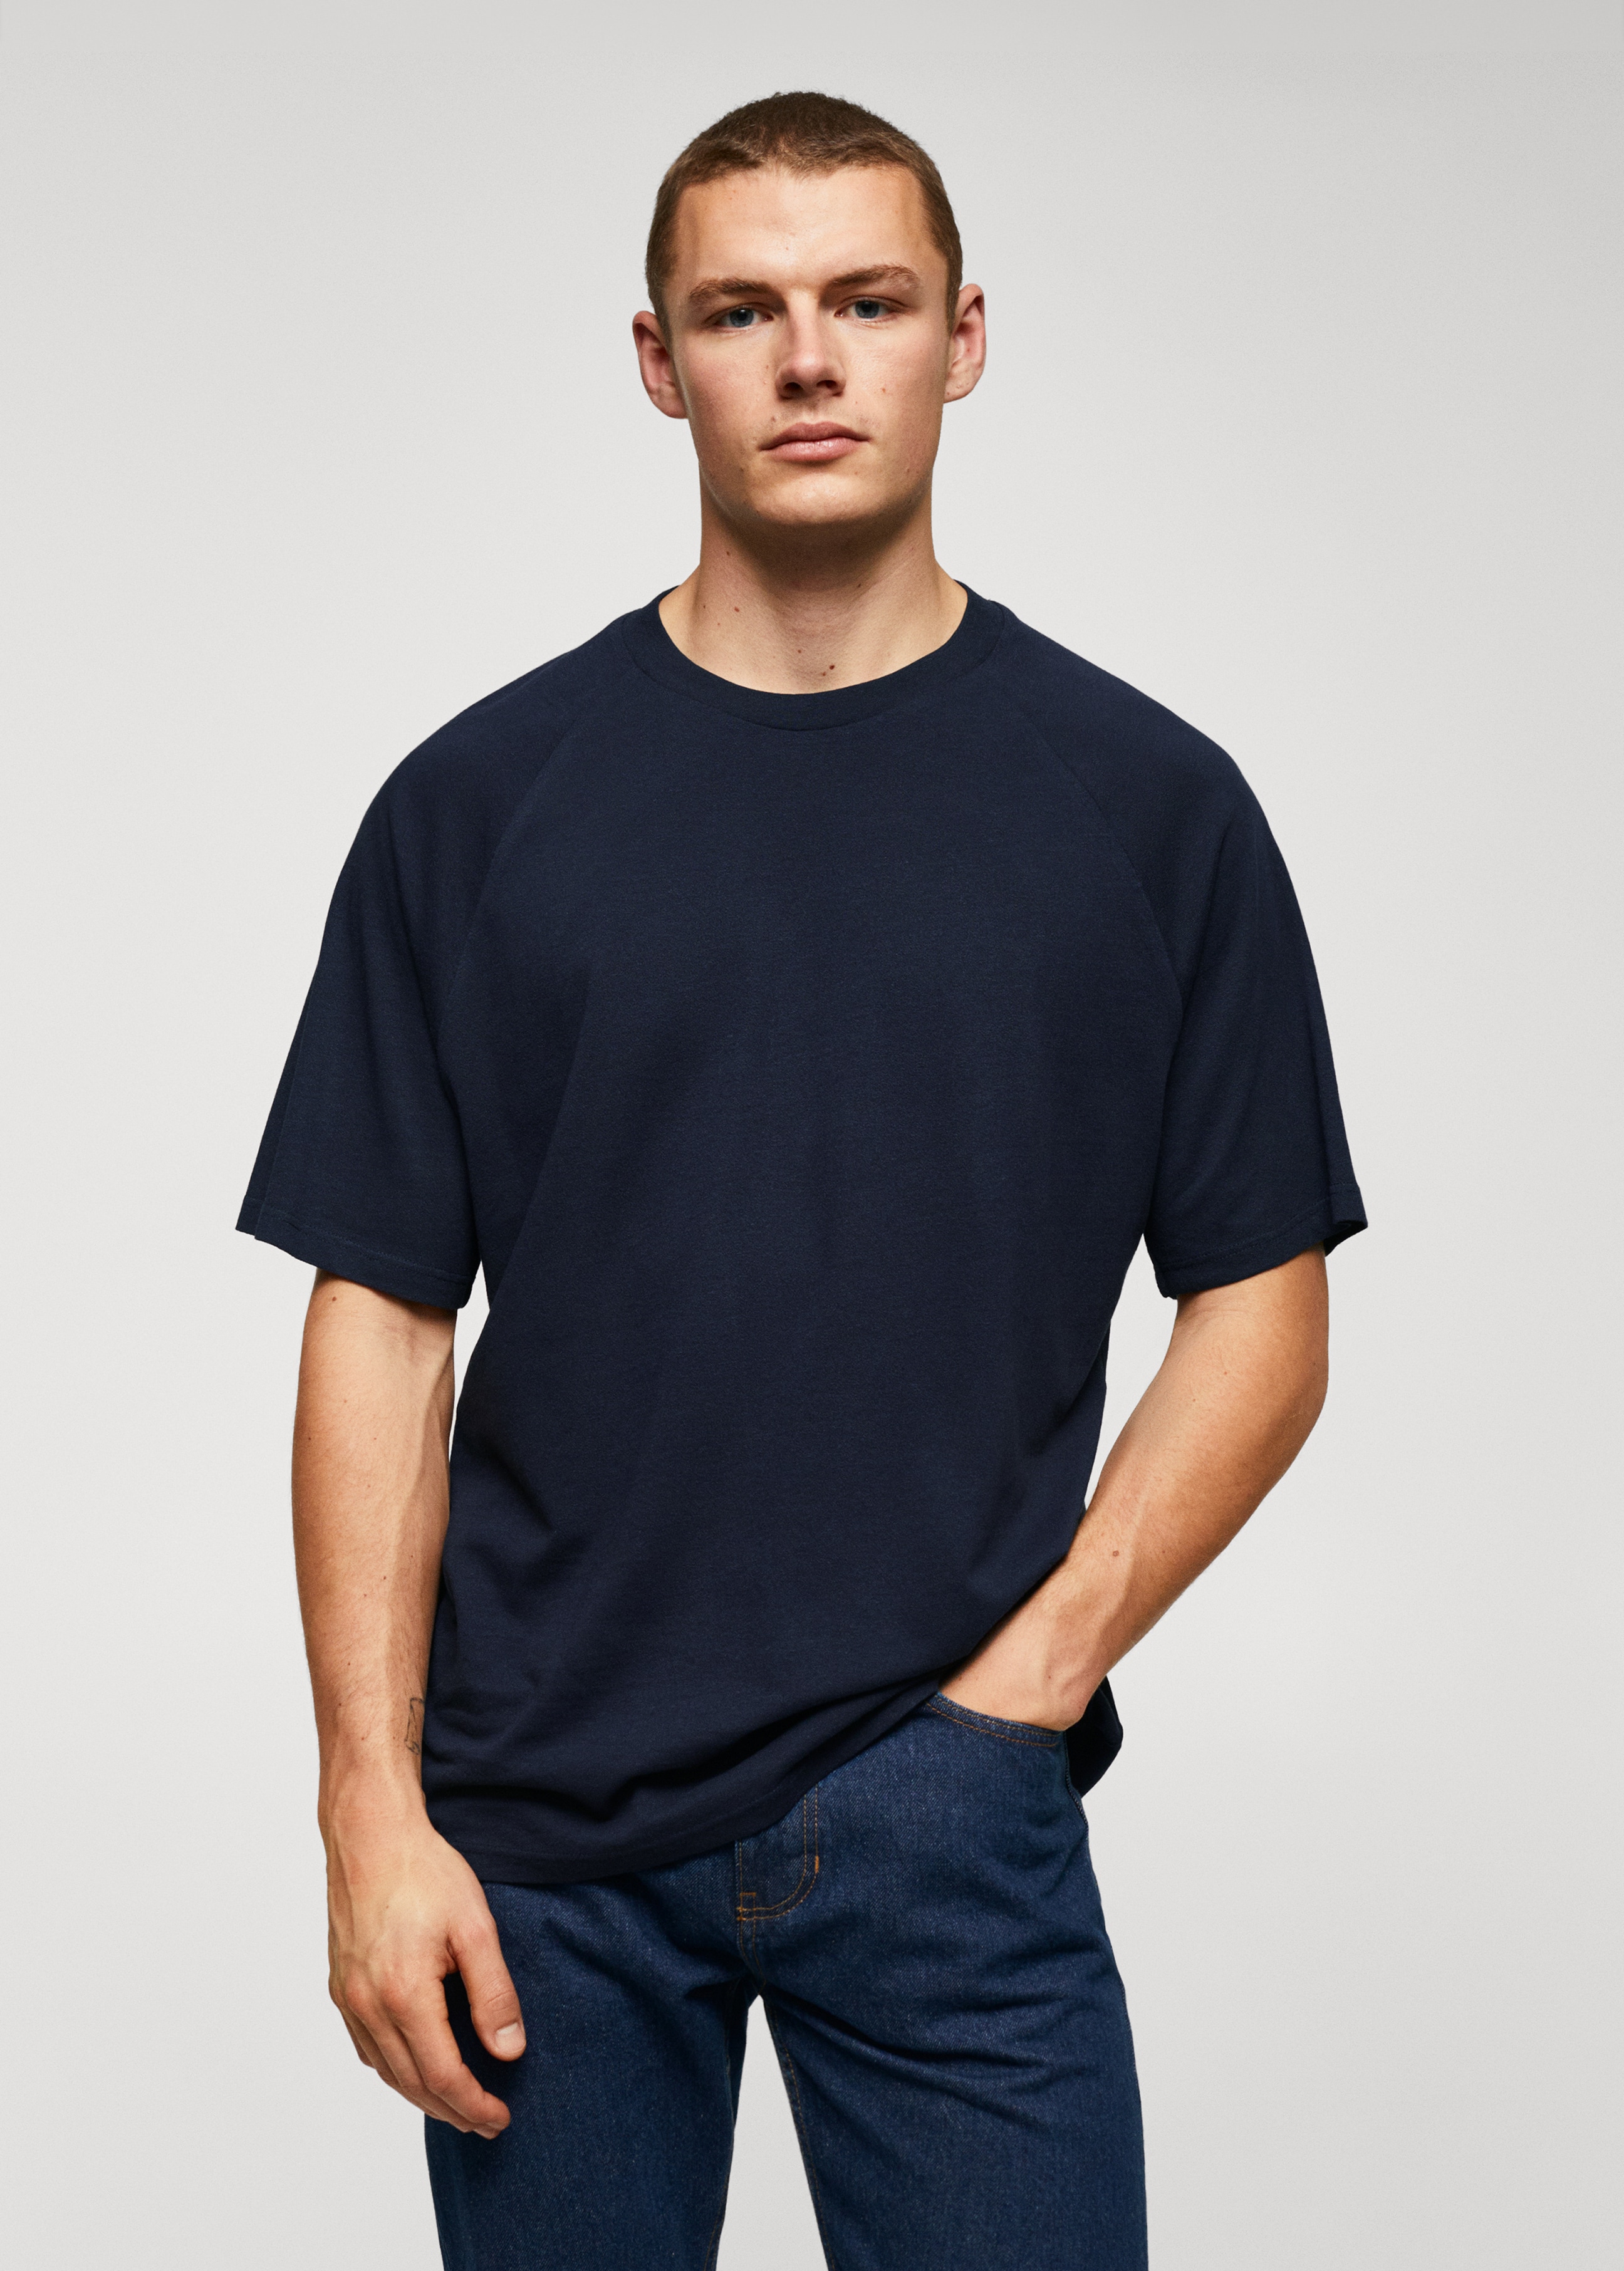 Camiseta algodón-lino textura - Plano medio